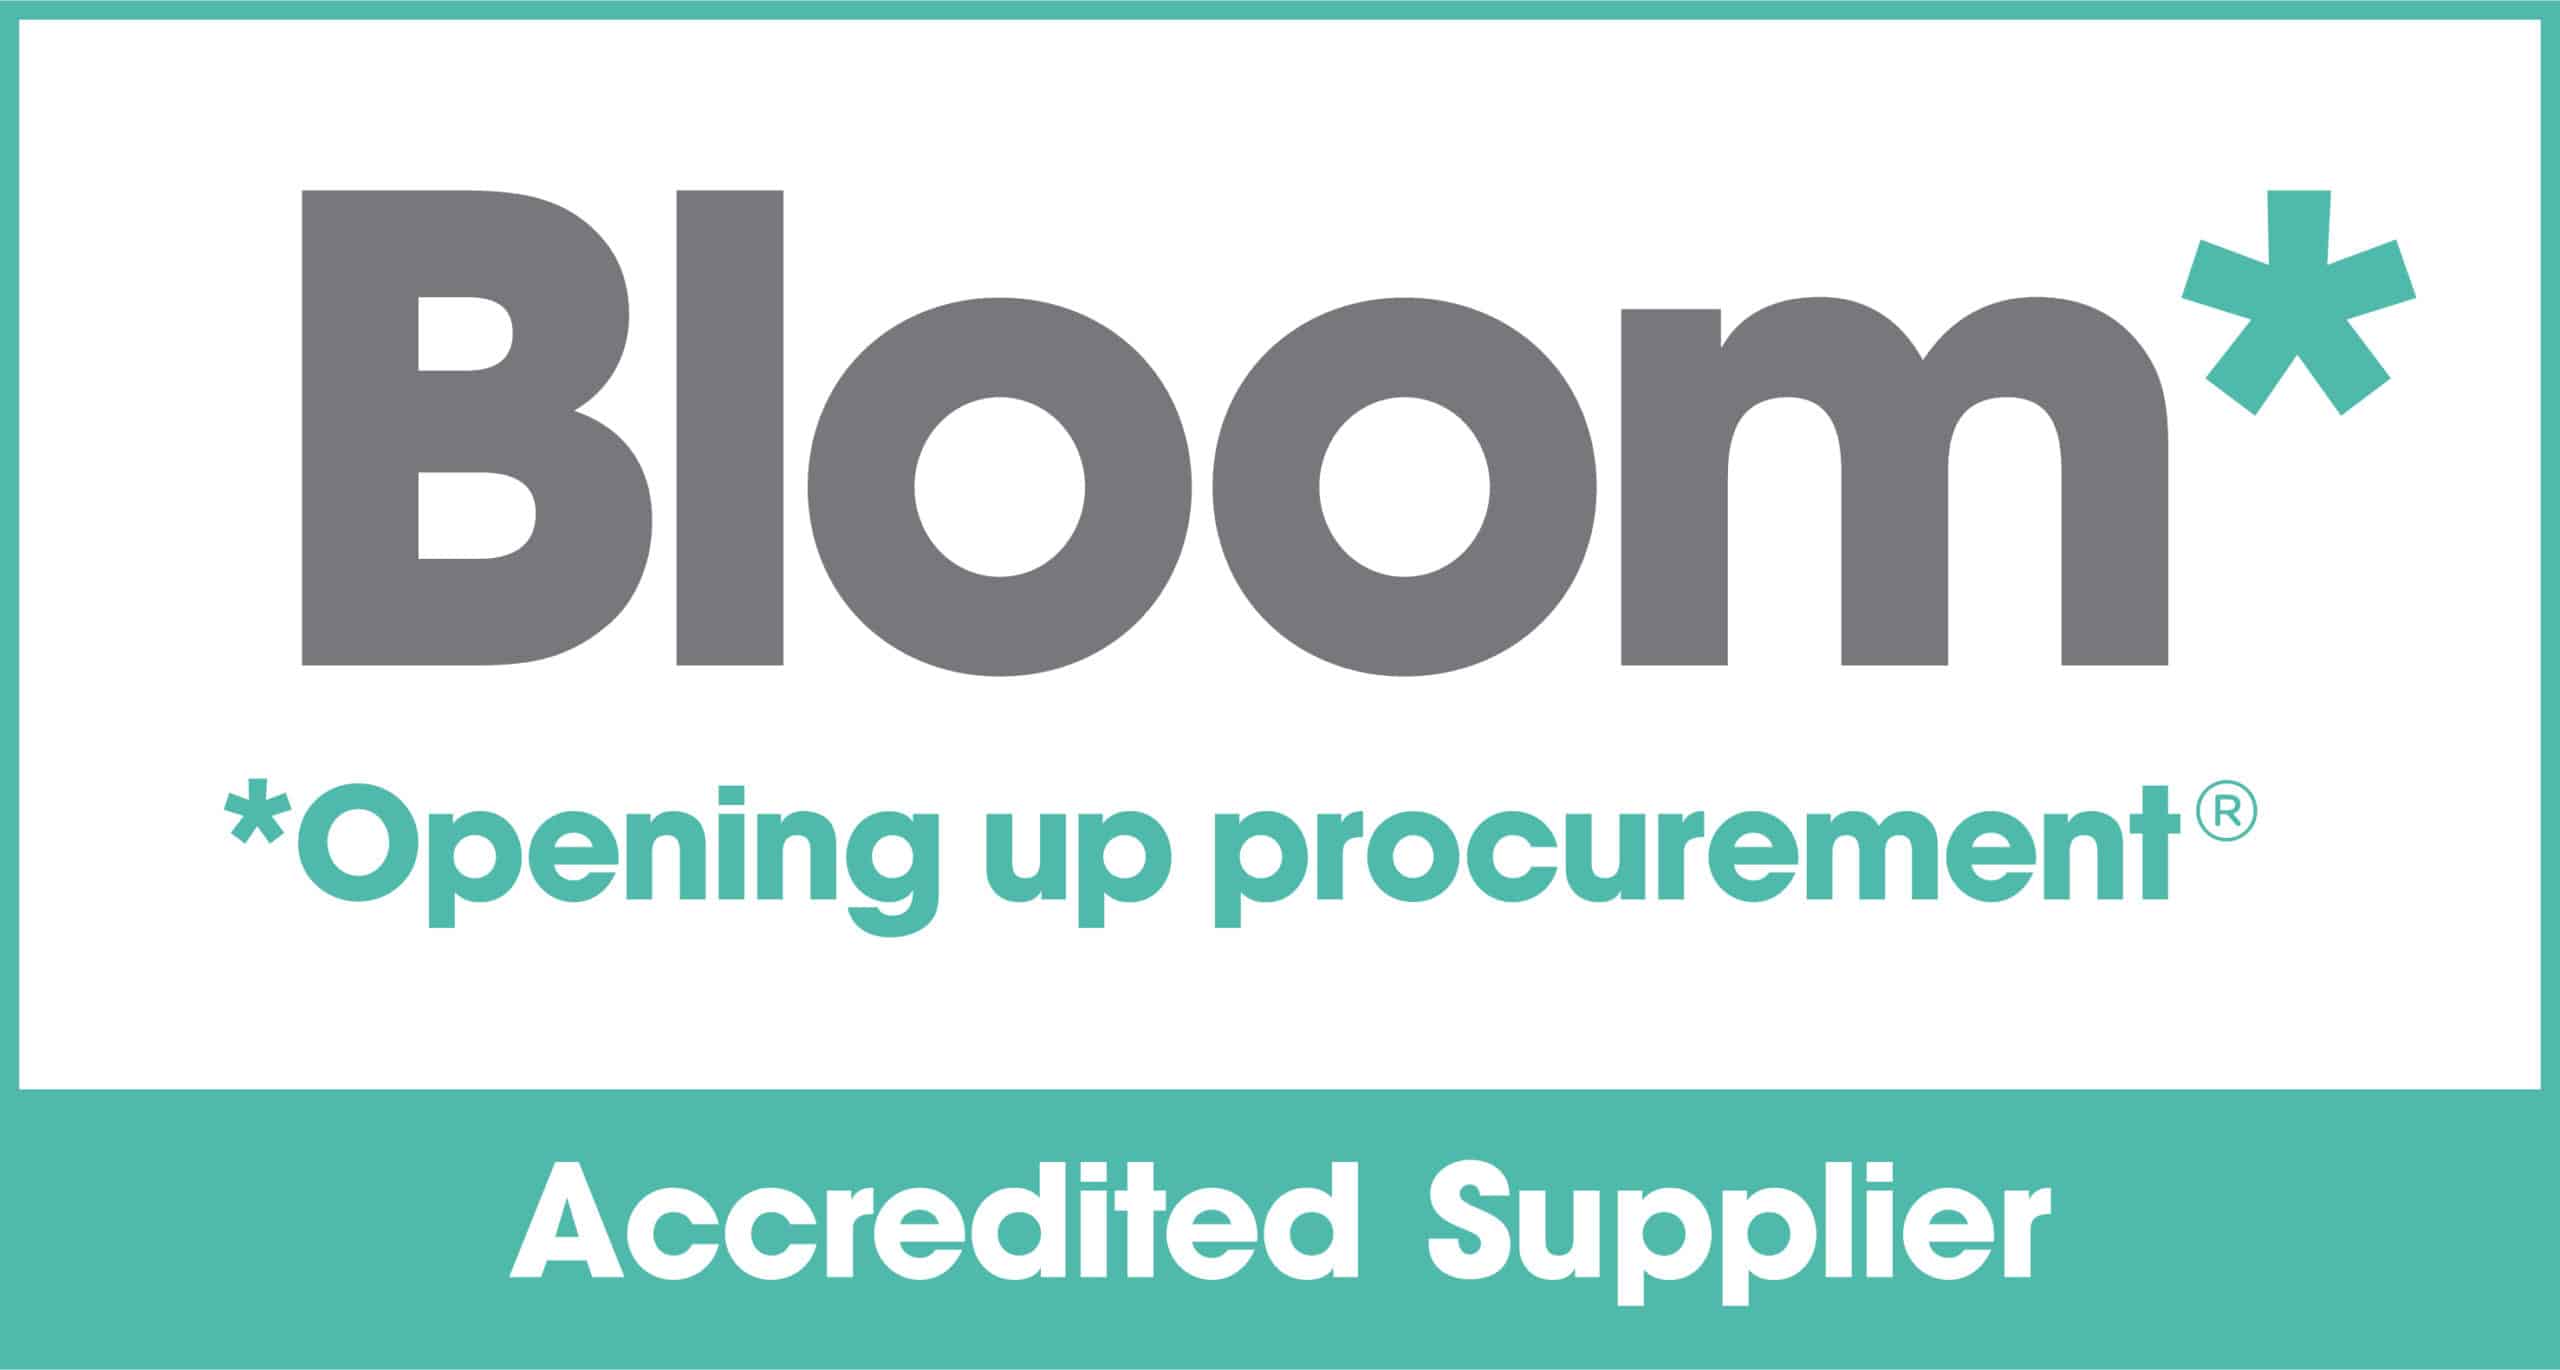 Bloom accreditation